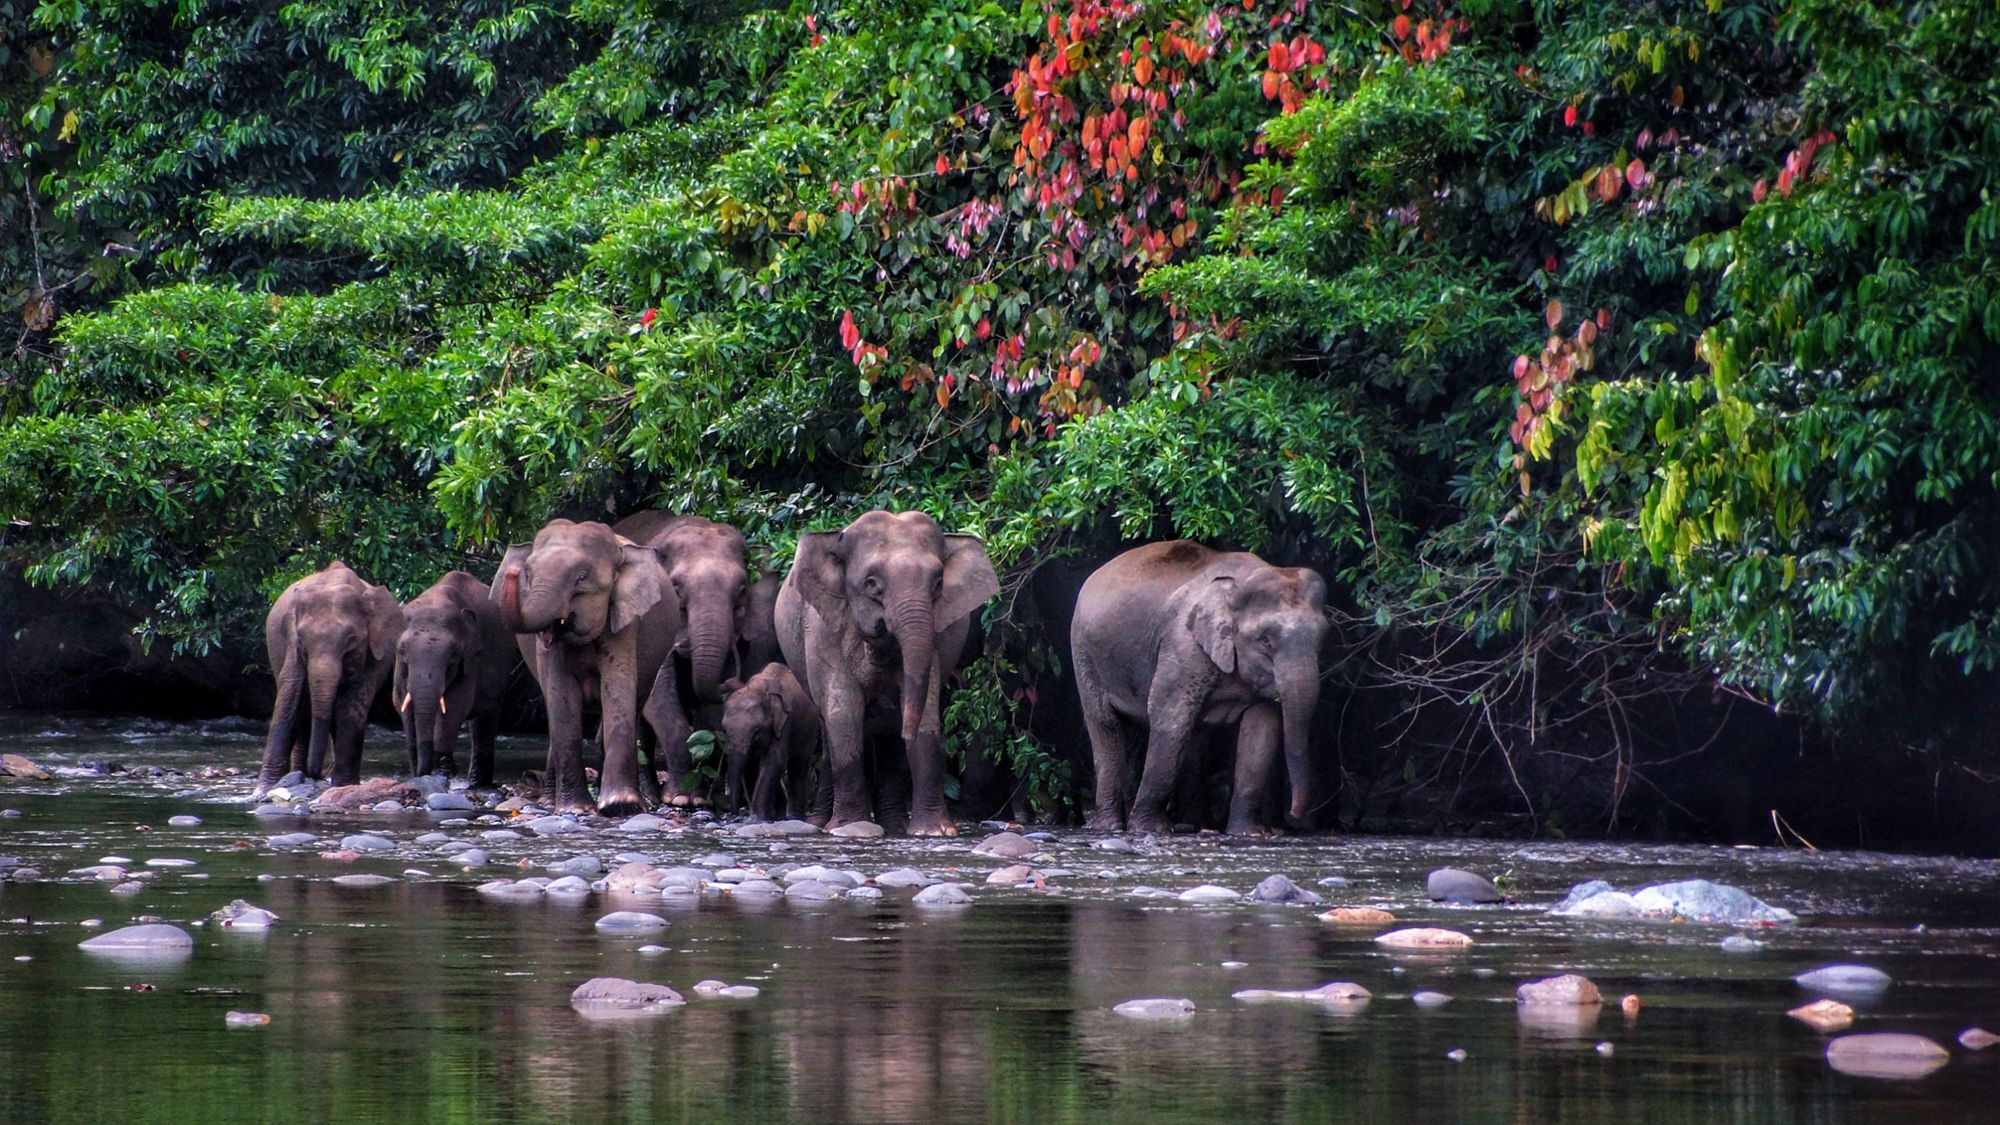 Borneo Pygmy Elephants strolling through a river in the Danum Valley. Photo: Getty